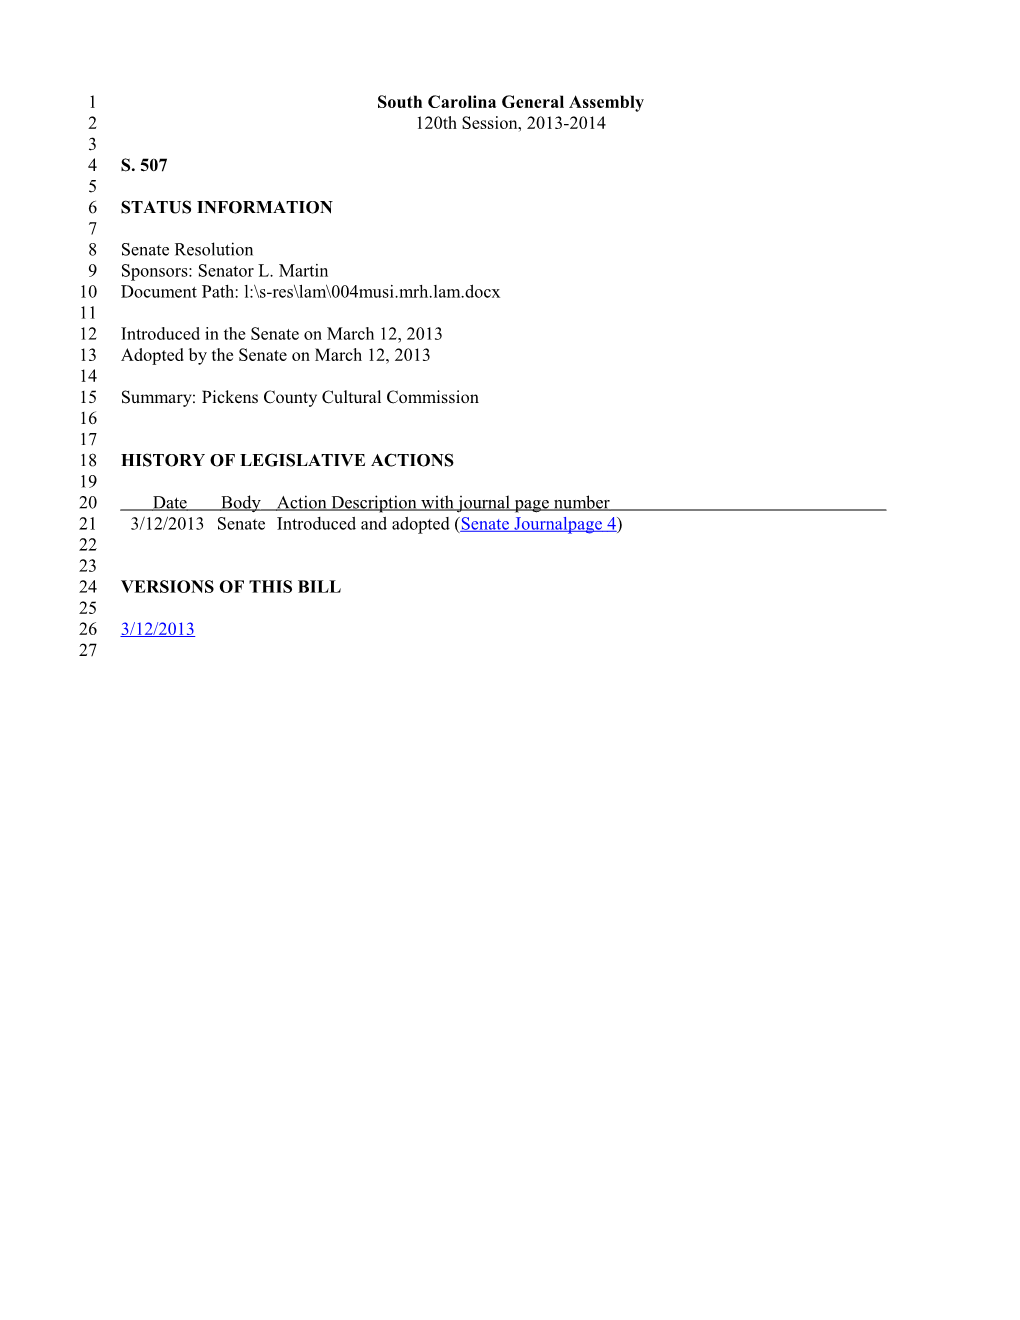 2013-2014 Bill 507: Pickens County Cultural Commission - South Carolina Legislature Online